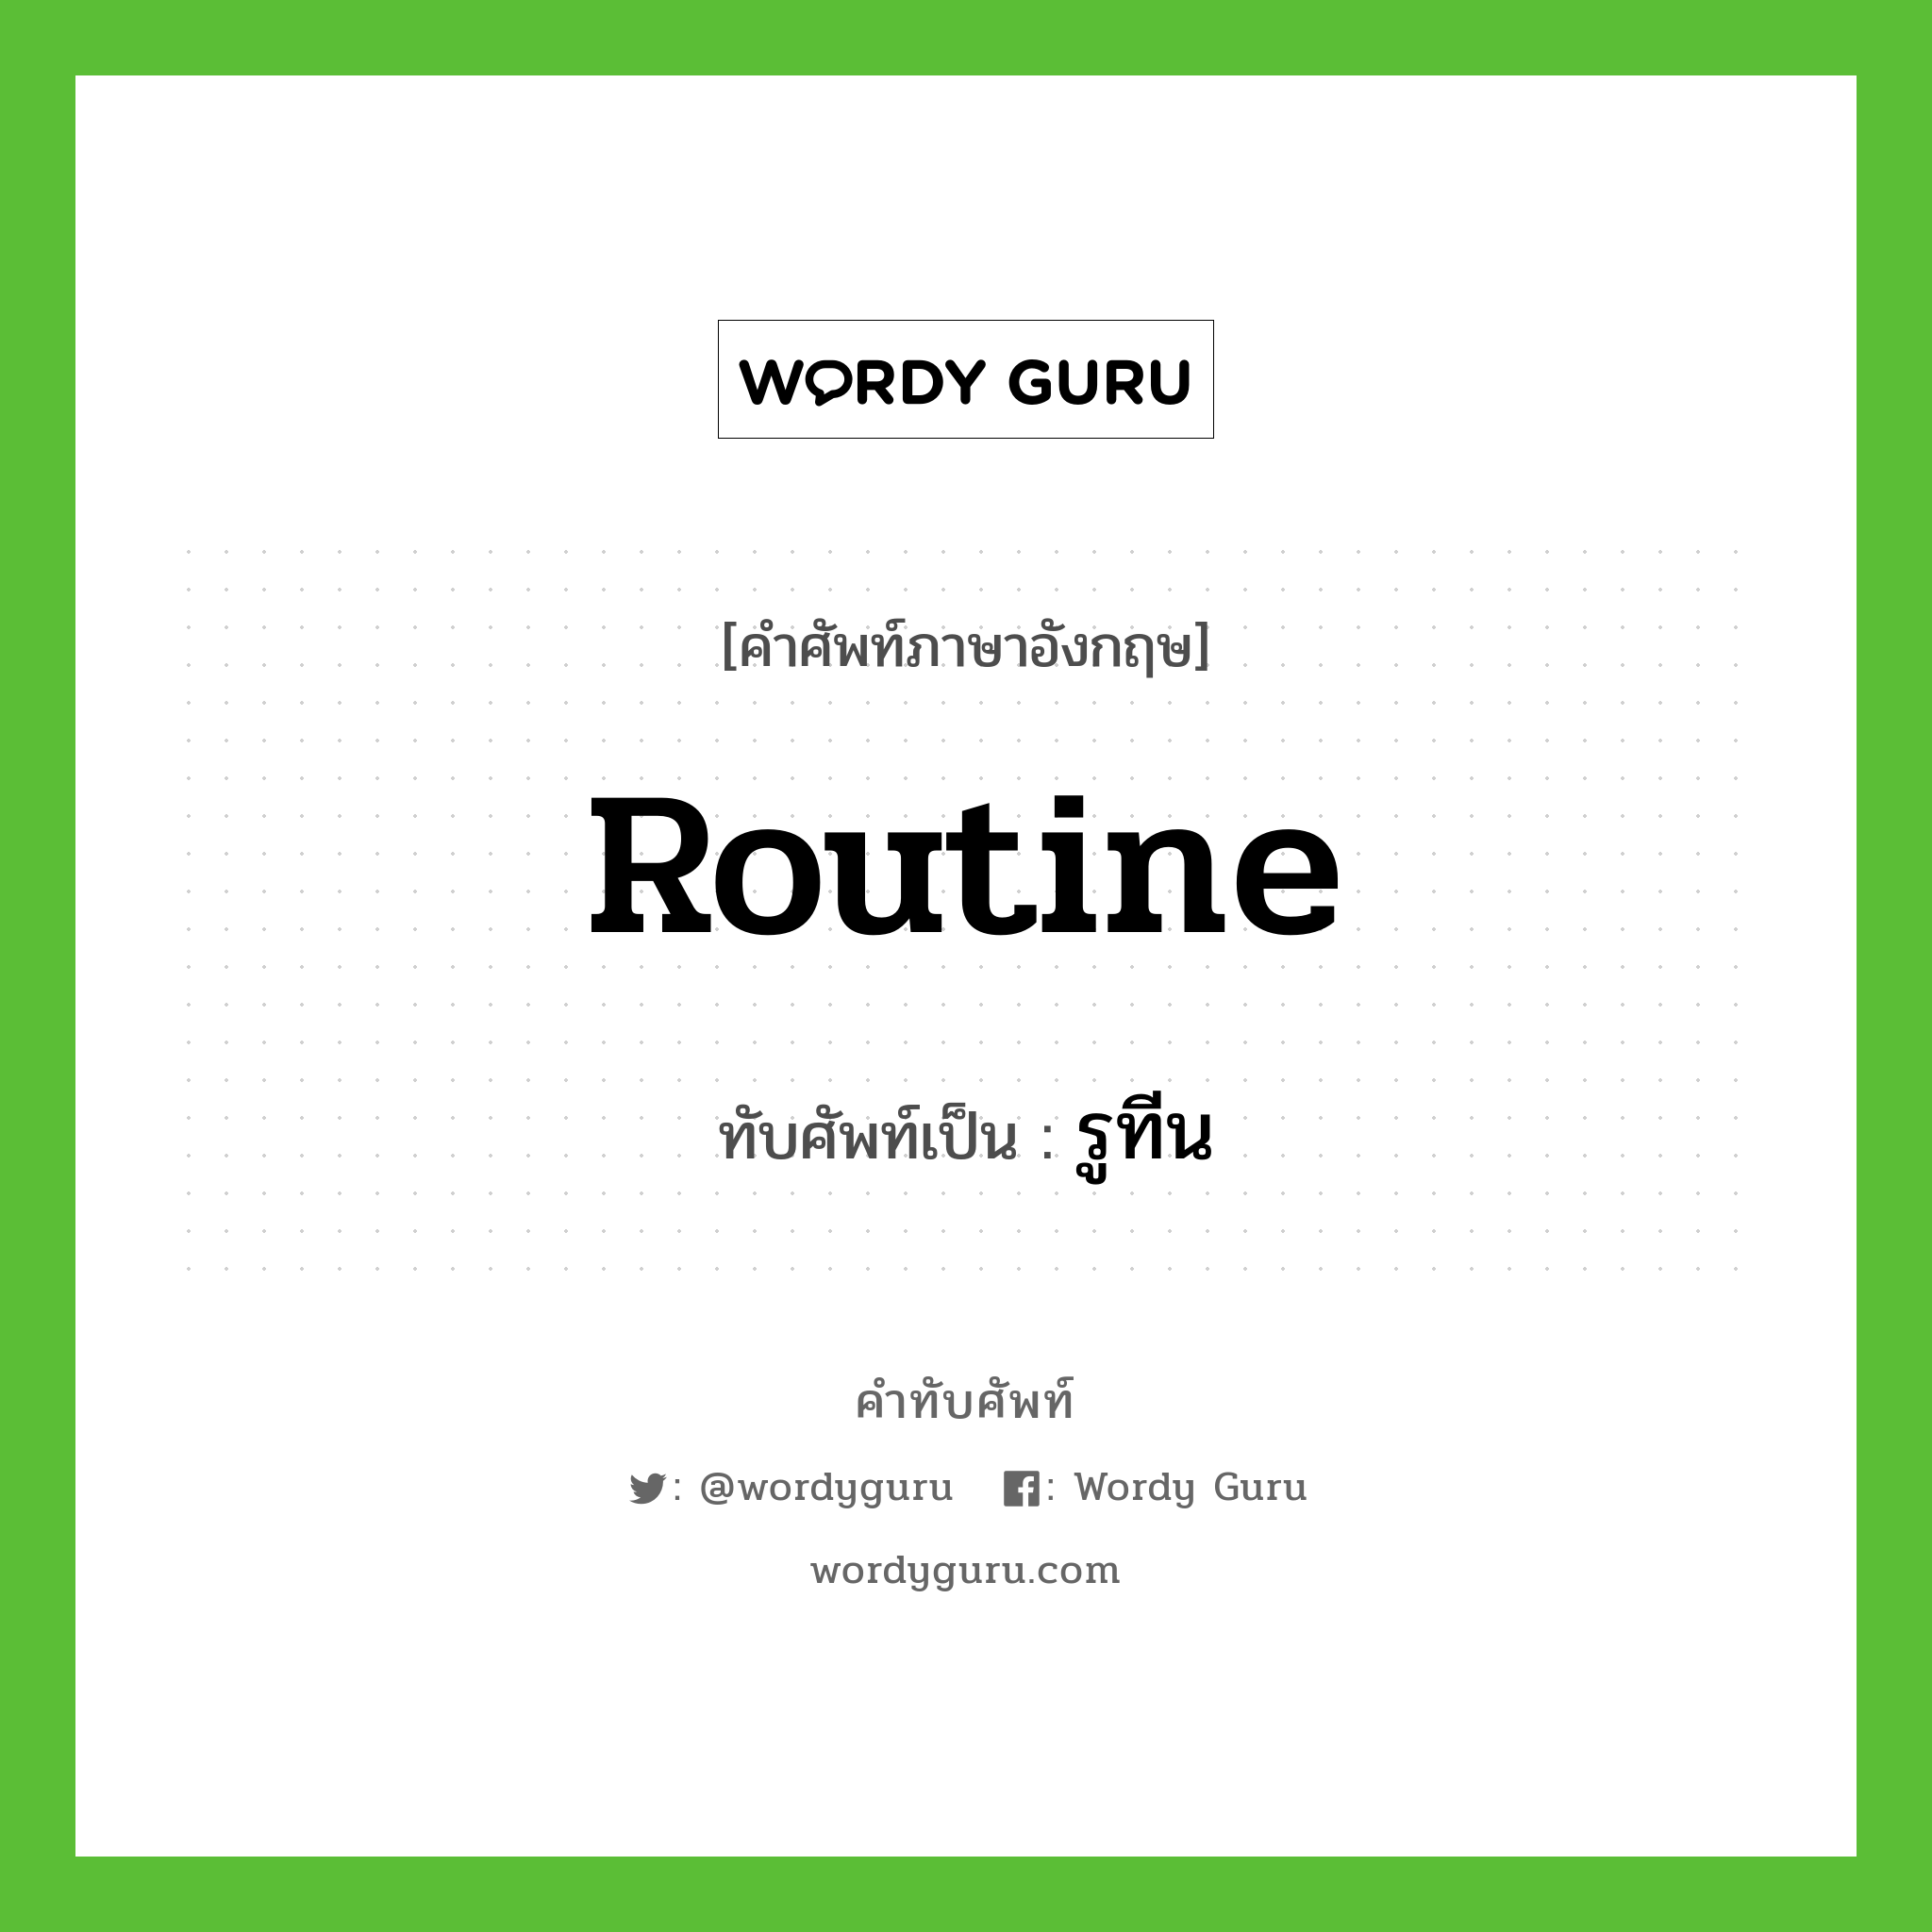 routine เขียนเป็นคำไทยว่าอะไร?, คำศัพท์ภาษาอังกฤษ routine ทับศัพท์เป็น รูทีน